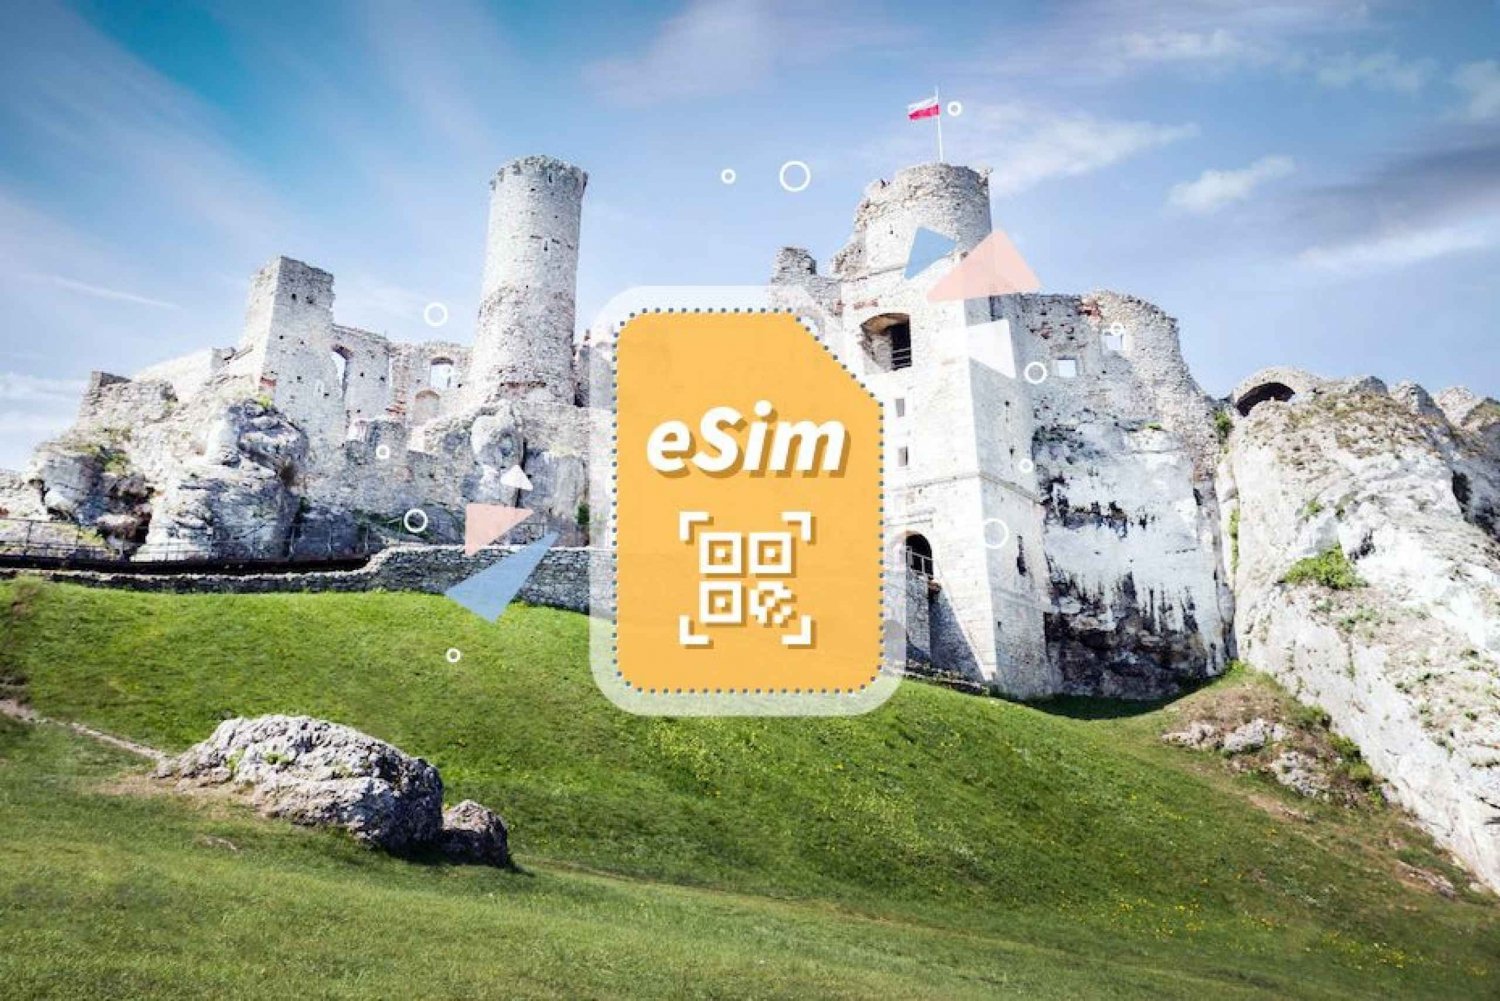 Polen/Europa: 5G eSim mobildataplan